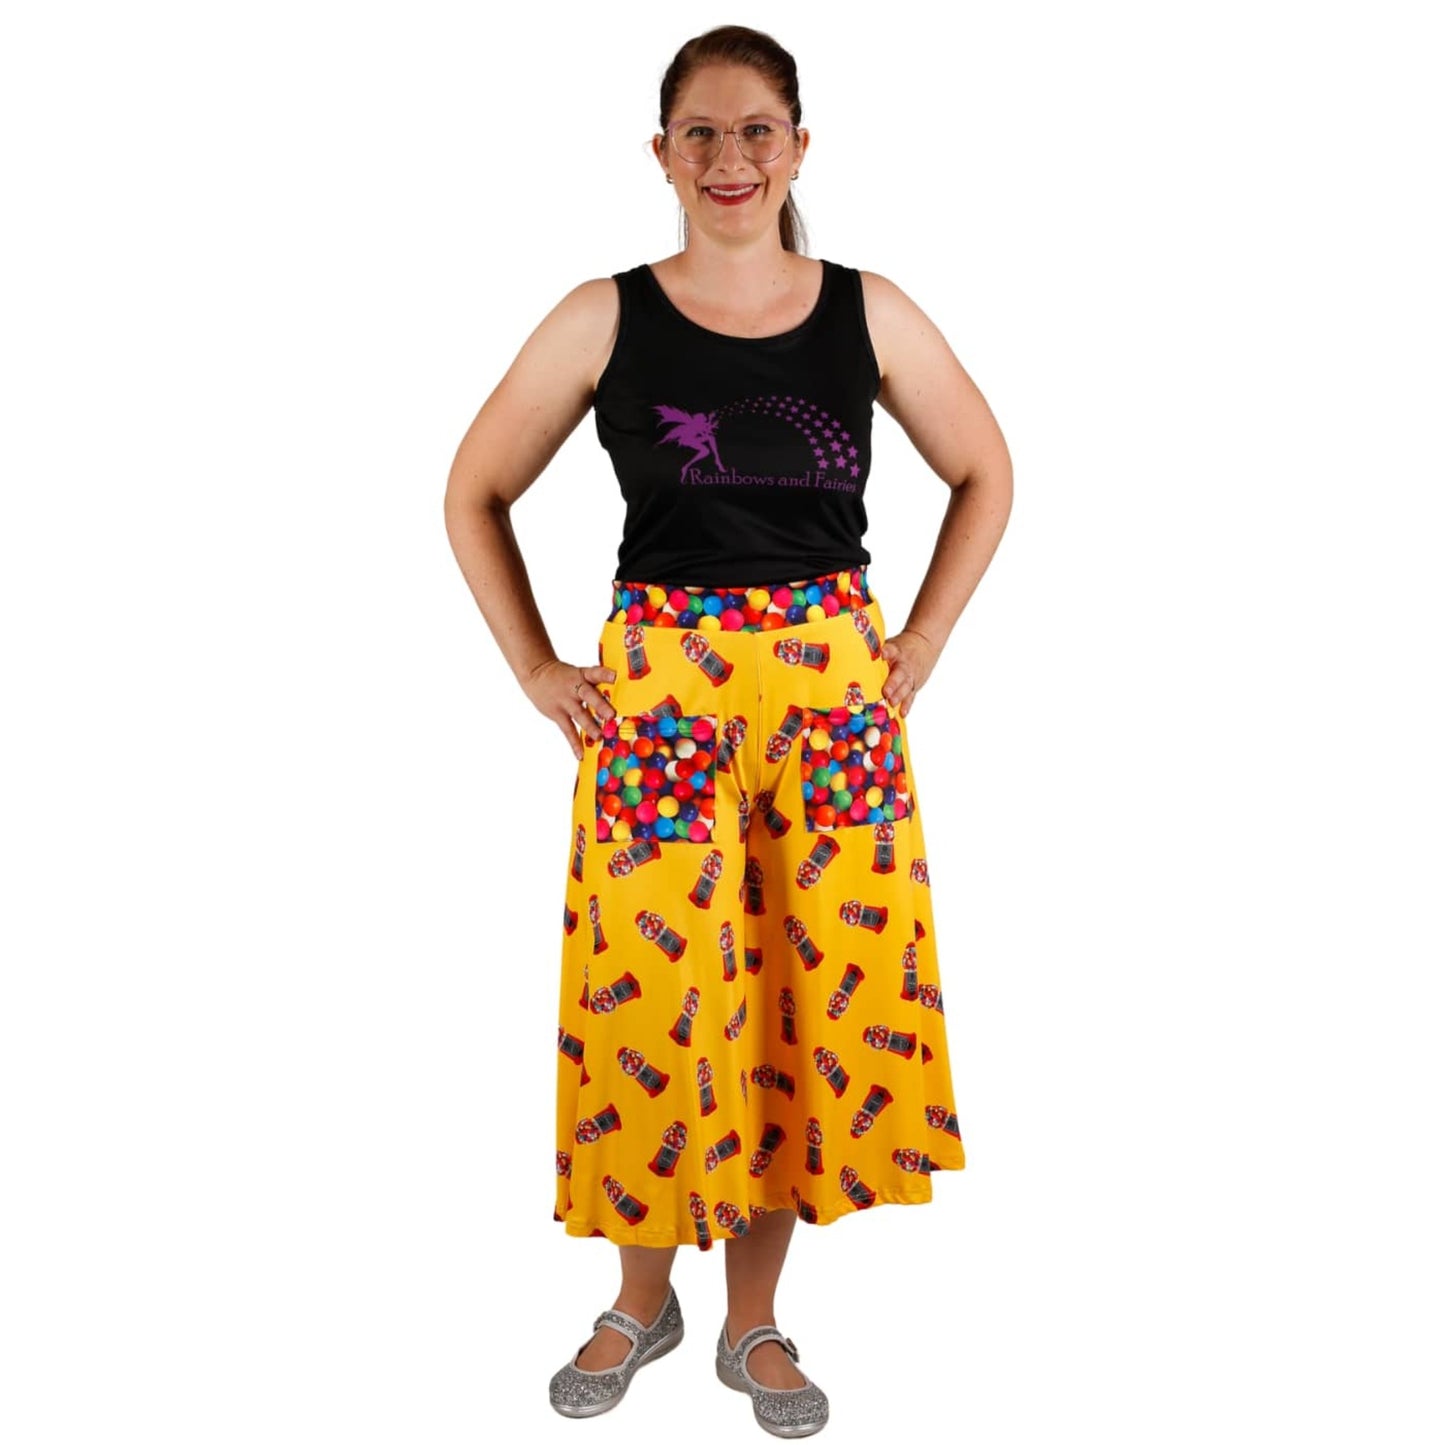 Gumball Culottes by RainbowsAndFairies.com.au (Gumballs - Bubblegum - 3 Quarter Pants - Wide Leg Pants - Vintage Inspired - Kitsch) - SKU: CL_CULTS_GBALL_ORG - Pic-02